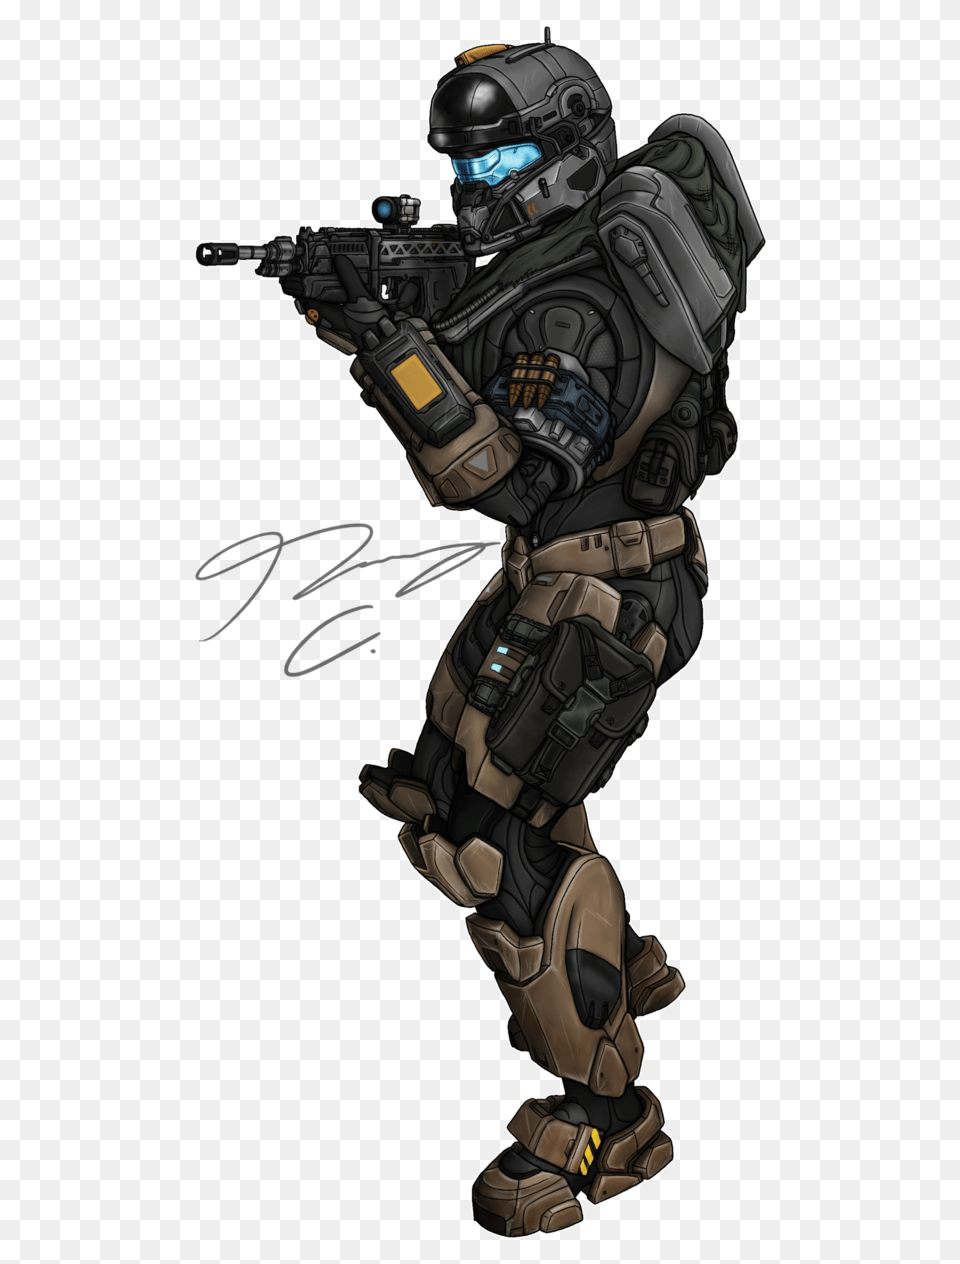 Tech Armor Concept Halo Spartan, Person, Helmet, Gun, Weapon Png Image